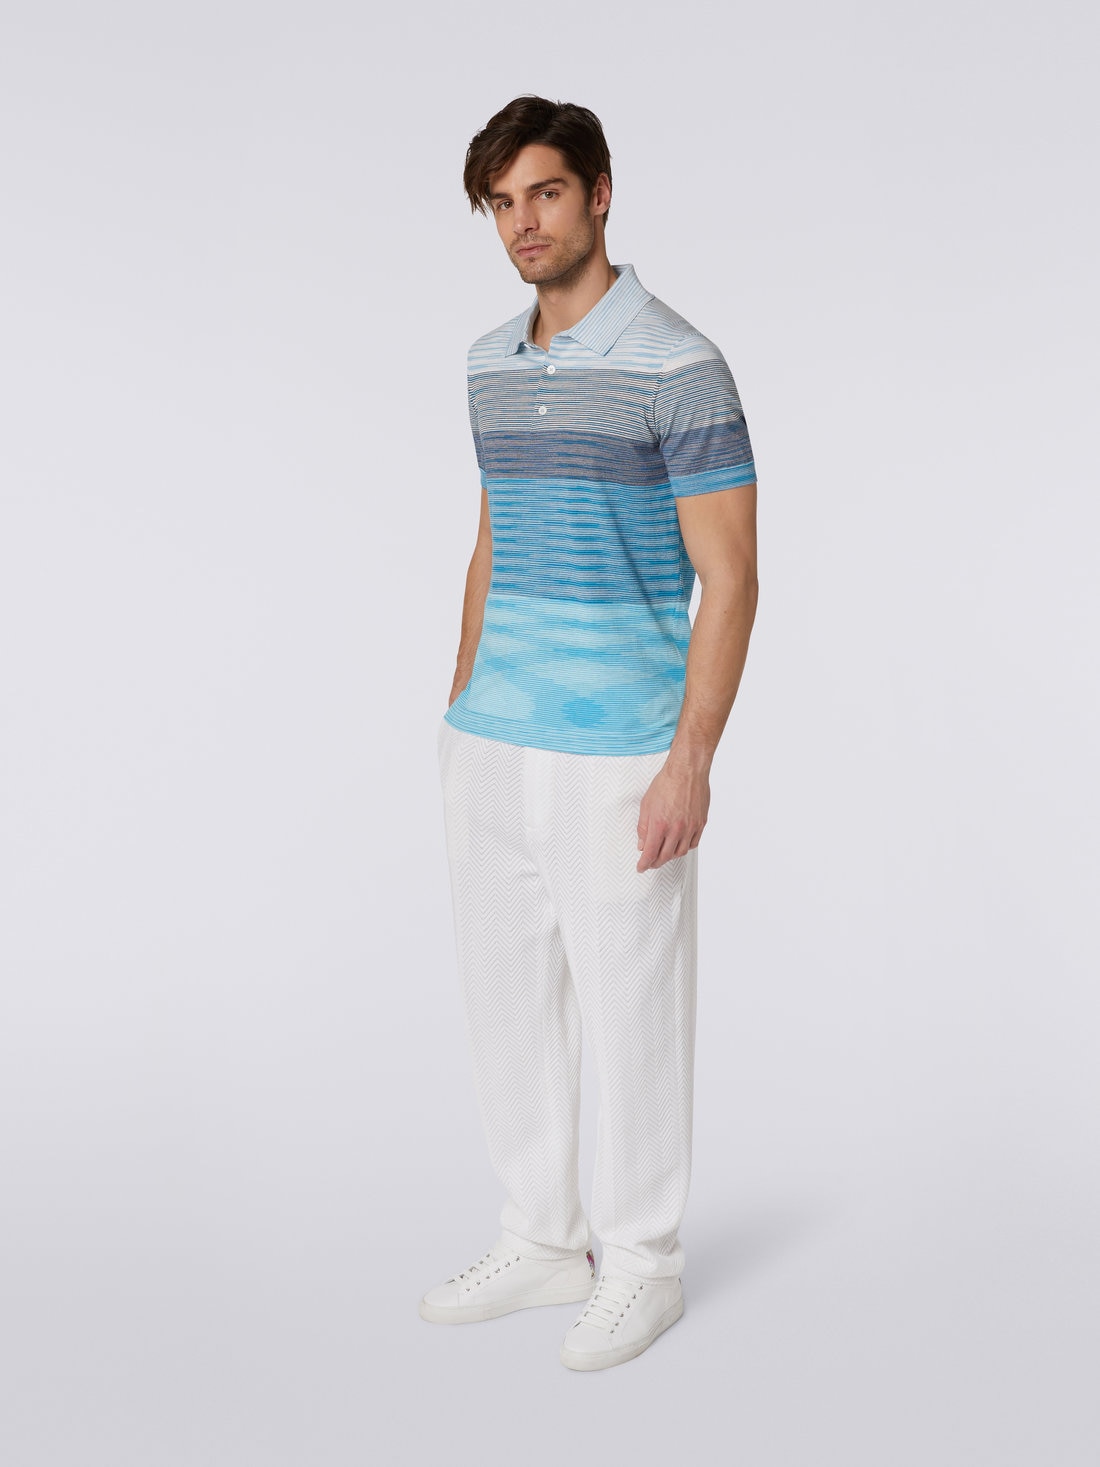 Kurzärmeliges Poloshirt aus gestreifter Baumwolle mit Dégradé-Effekt, Weiß & Hellblau - US23S20PBK012QS7294 - 2